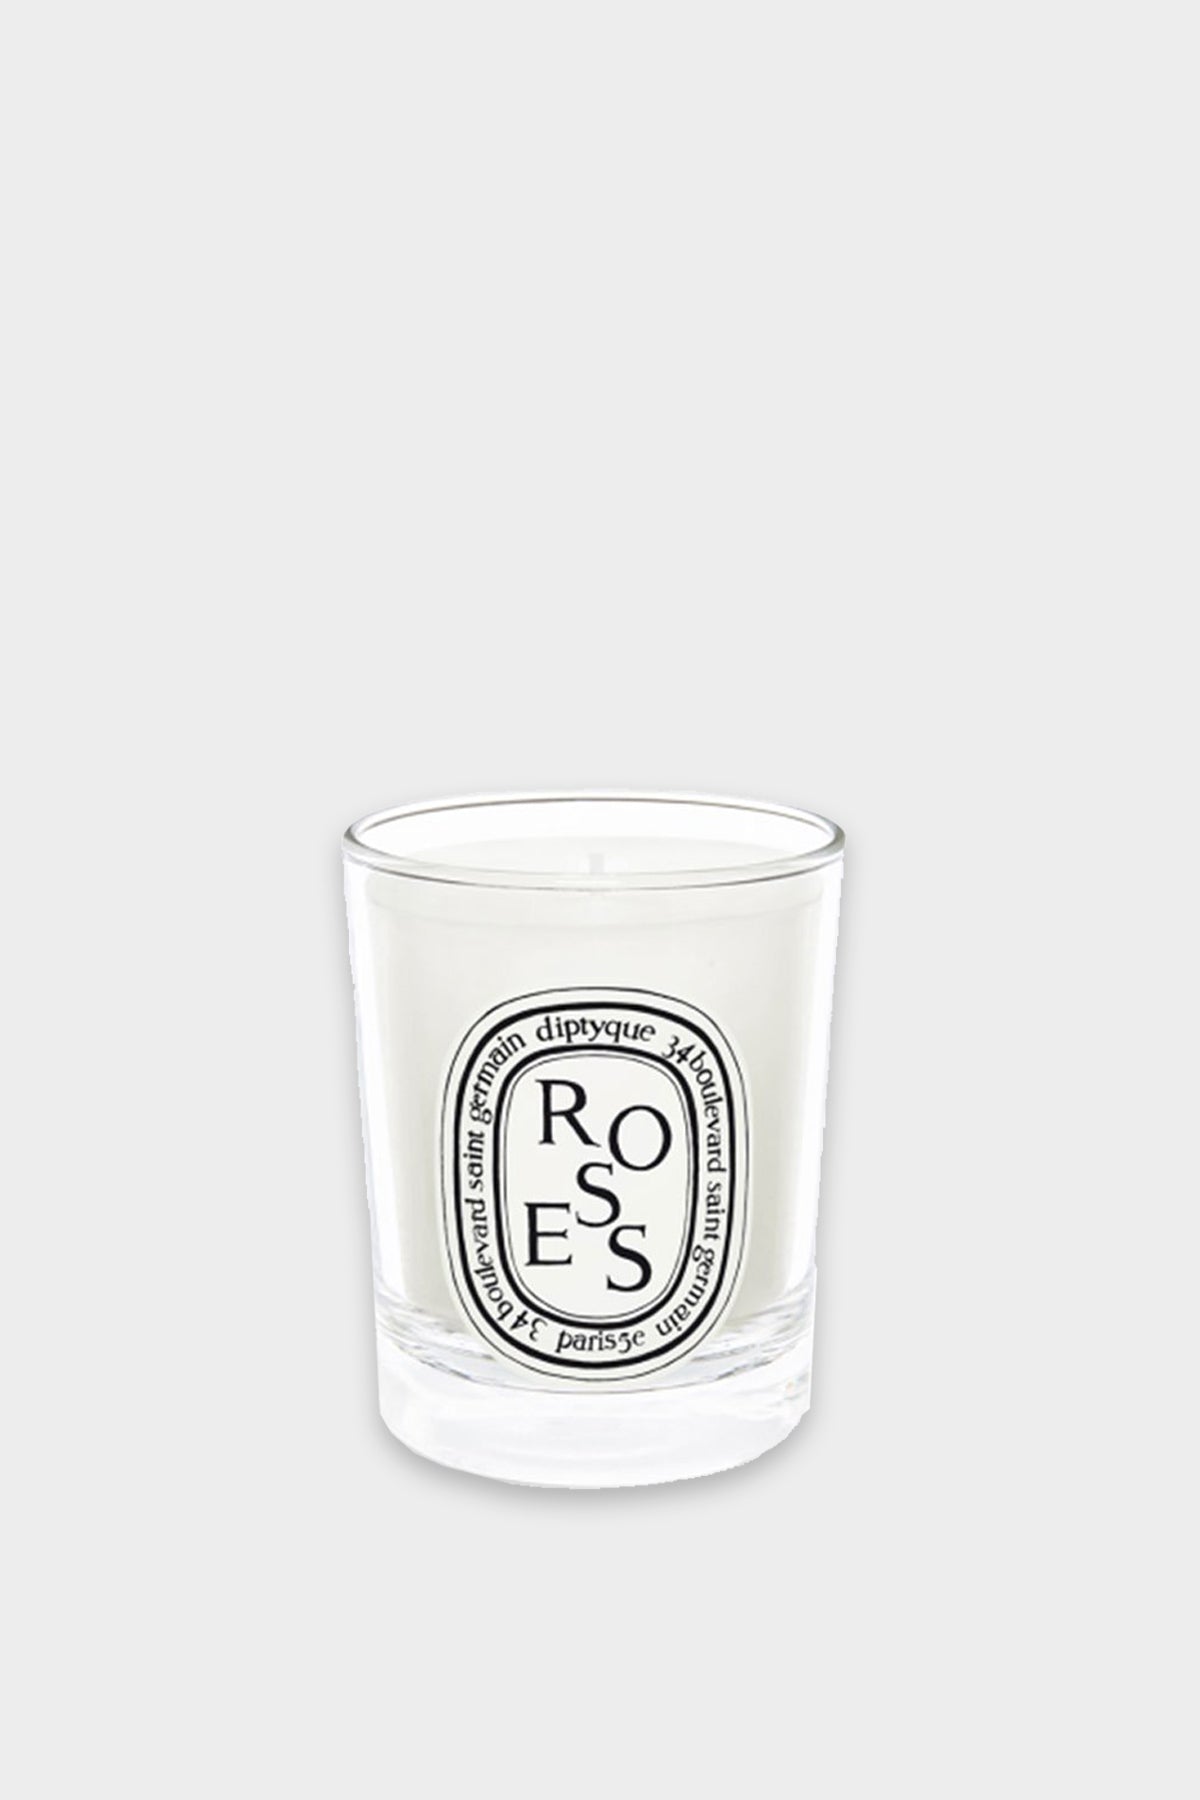 Roses Mini Candle - shop-olivia.com